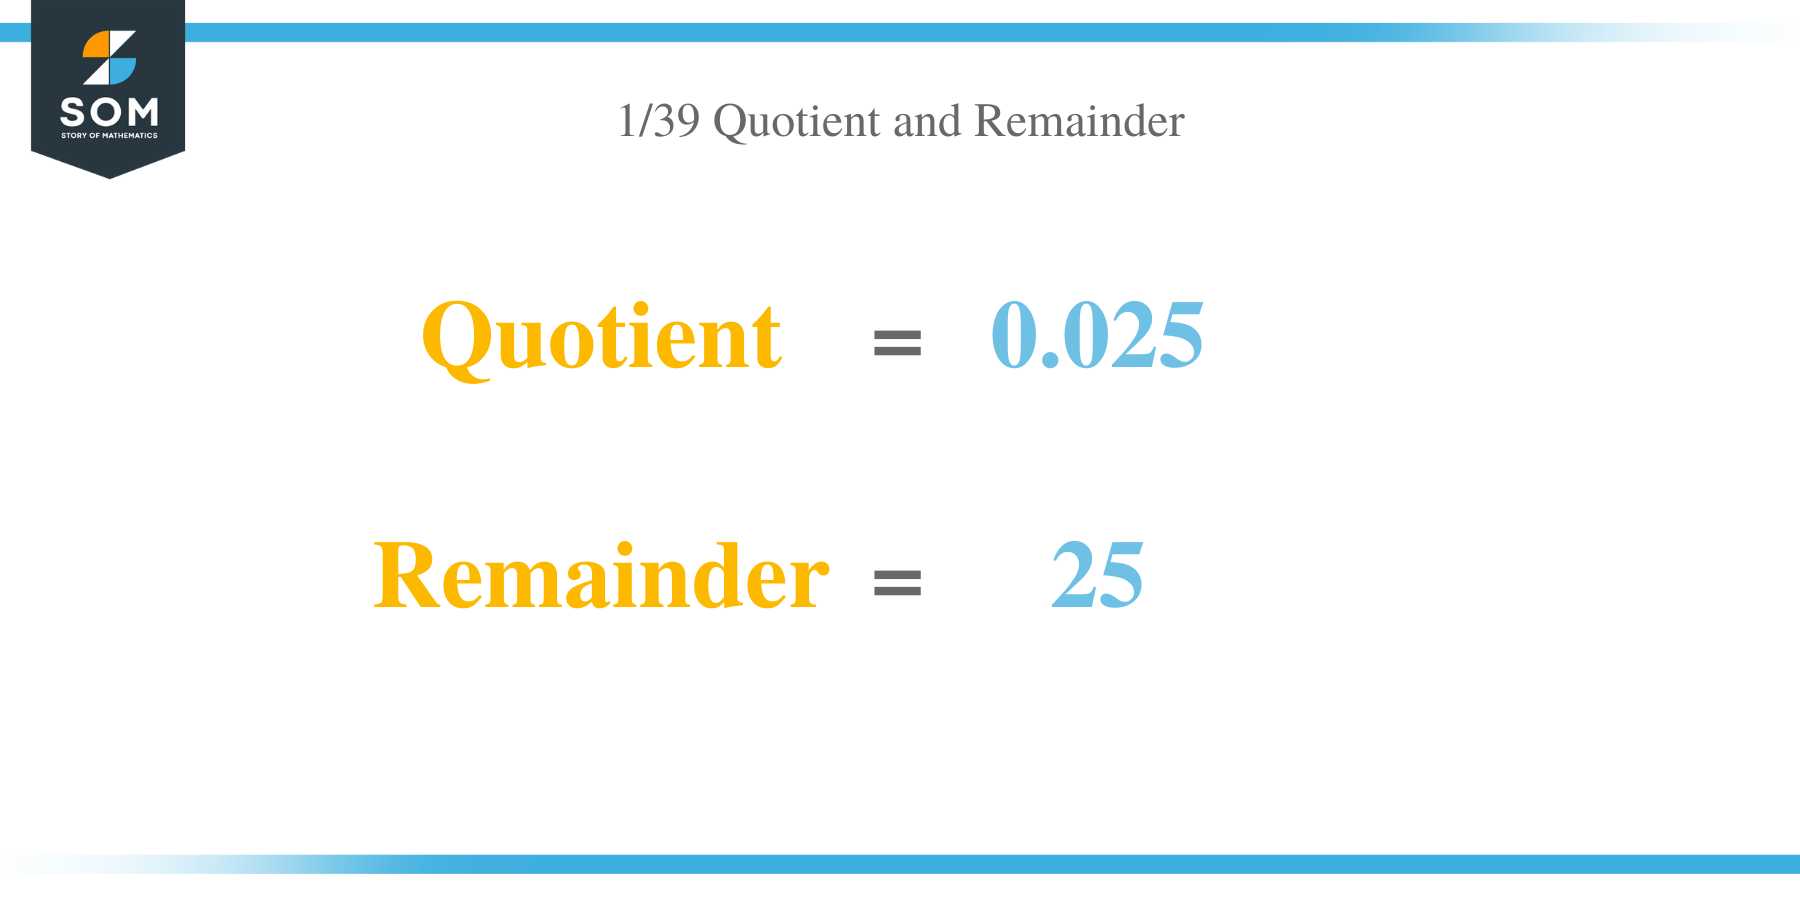 Quotient and Remainder of 1 per 39